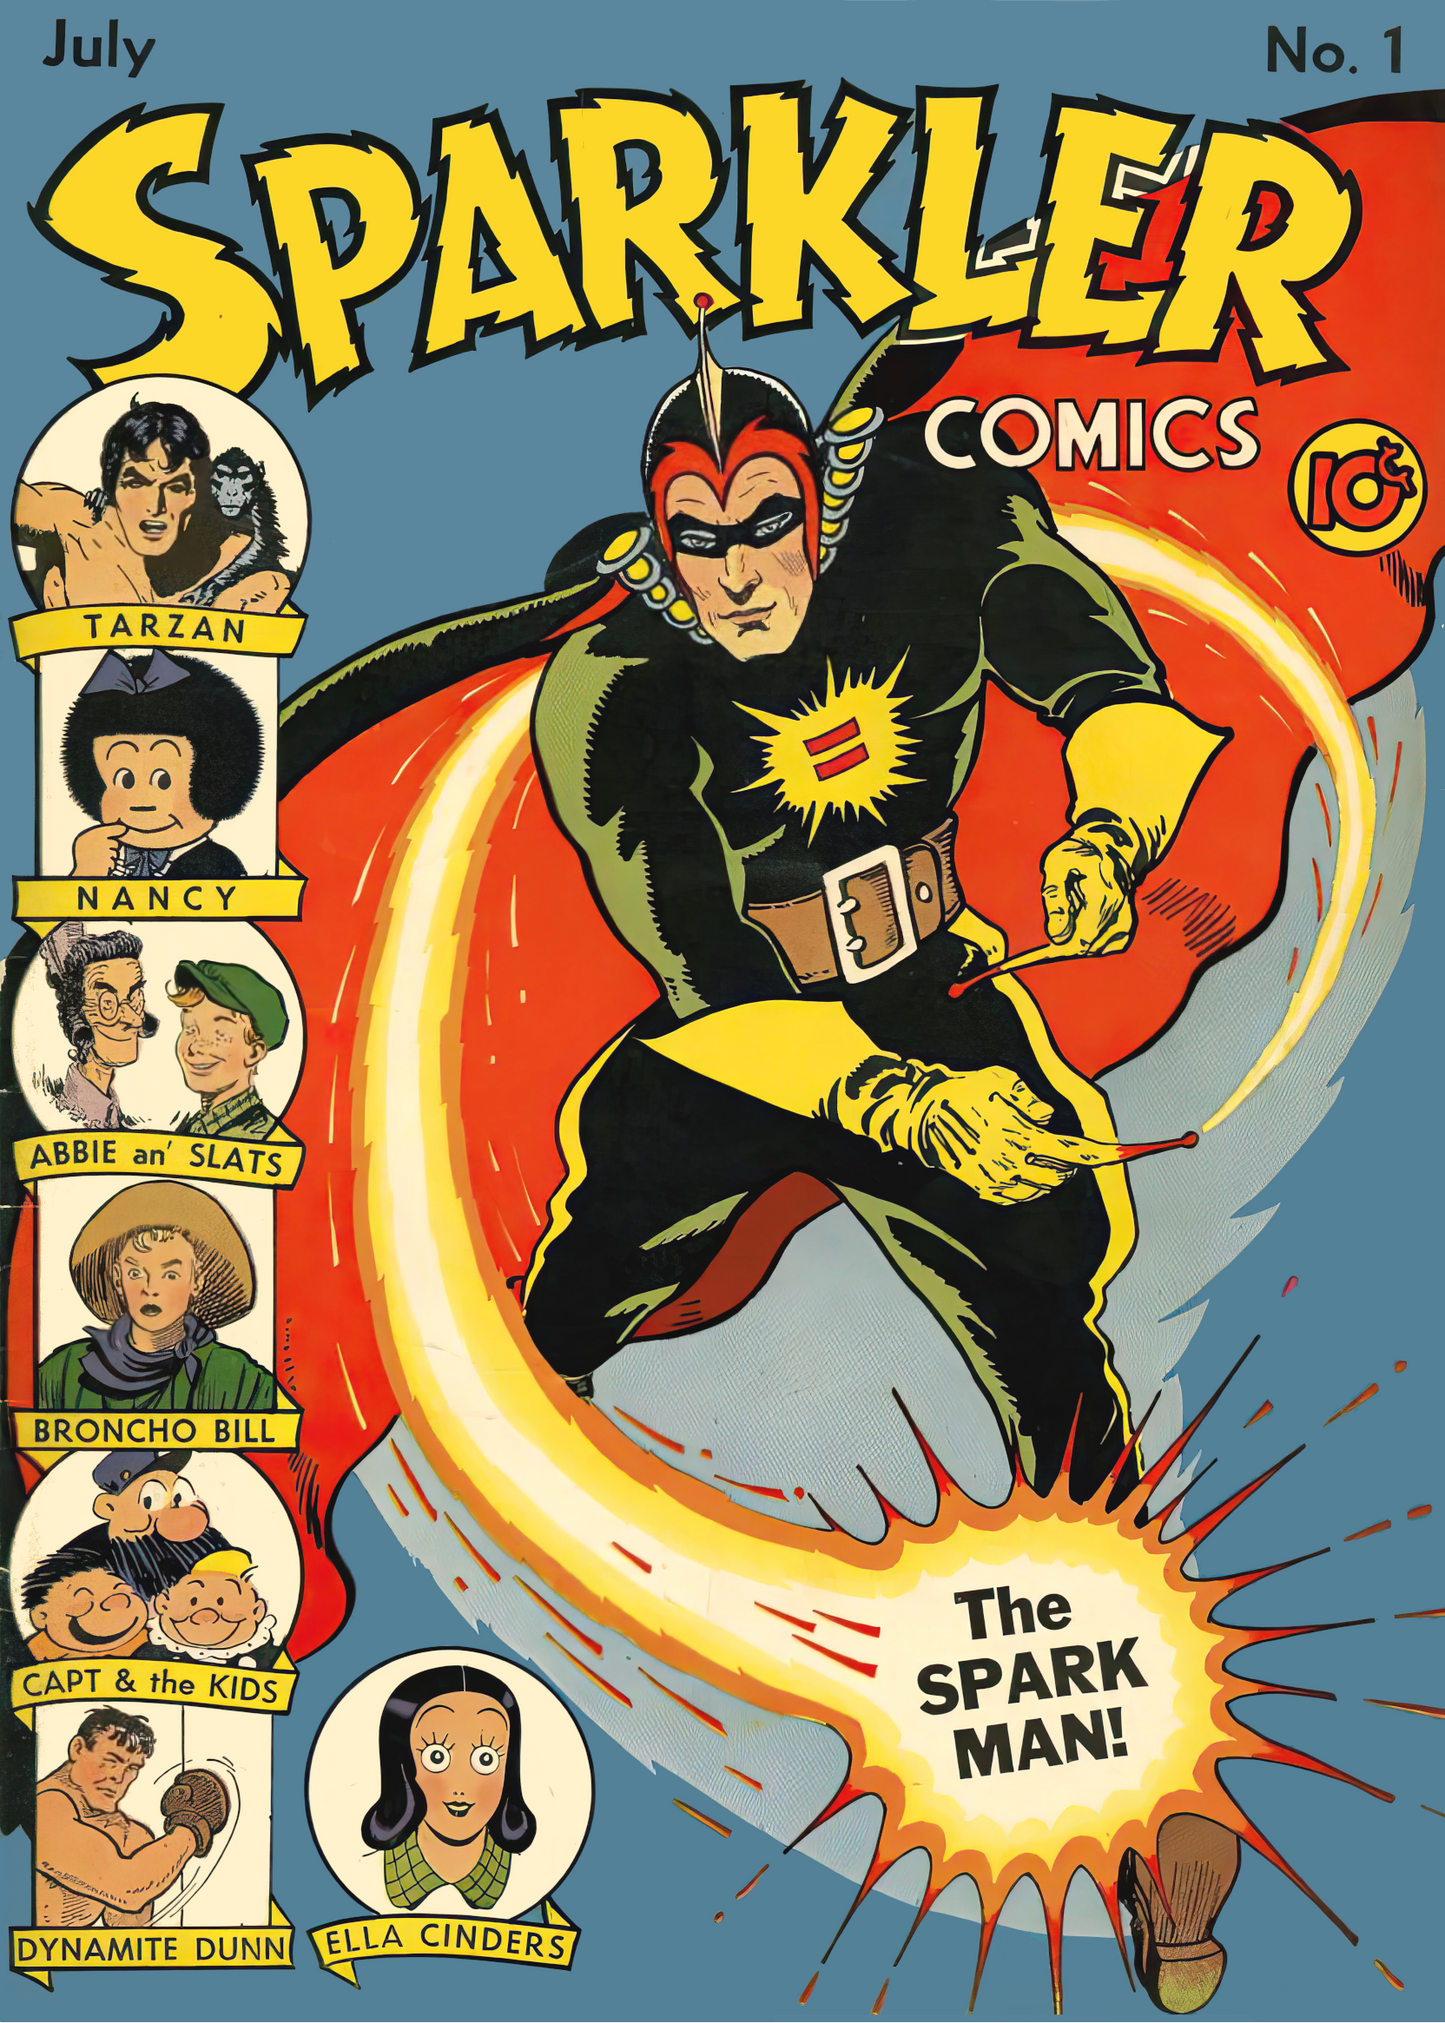 #1011 Sparkler Comics #1